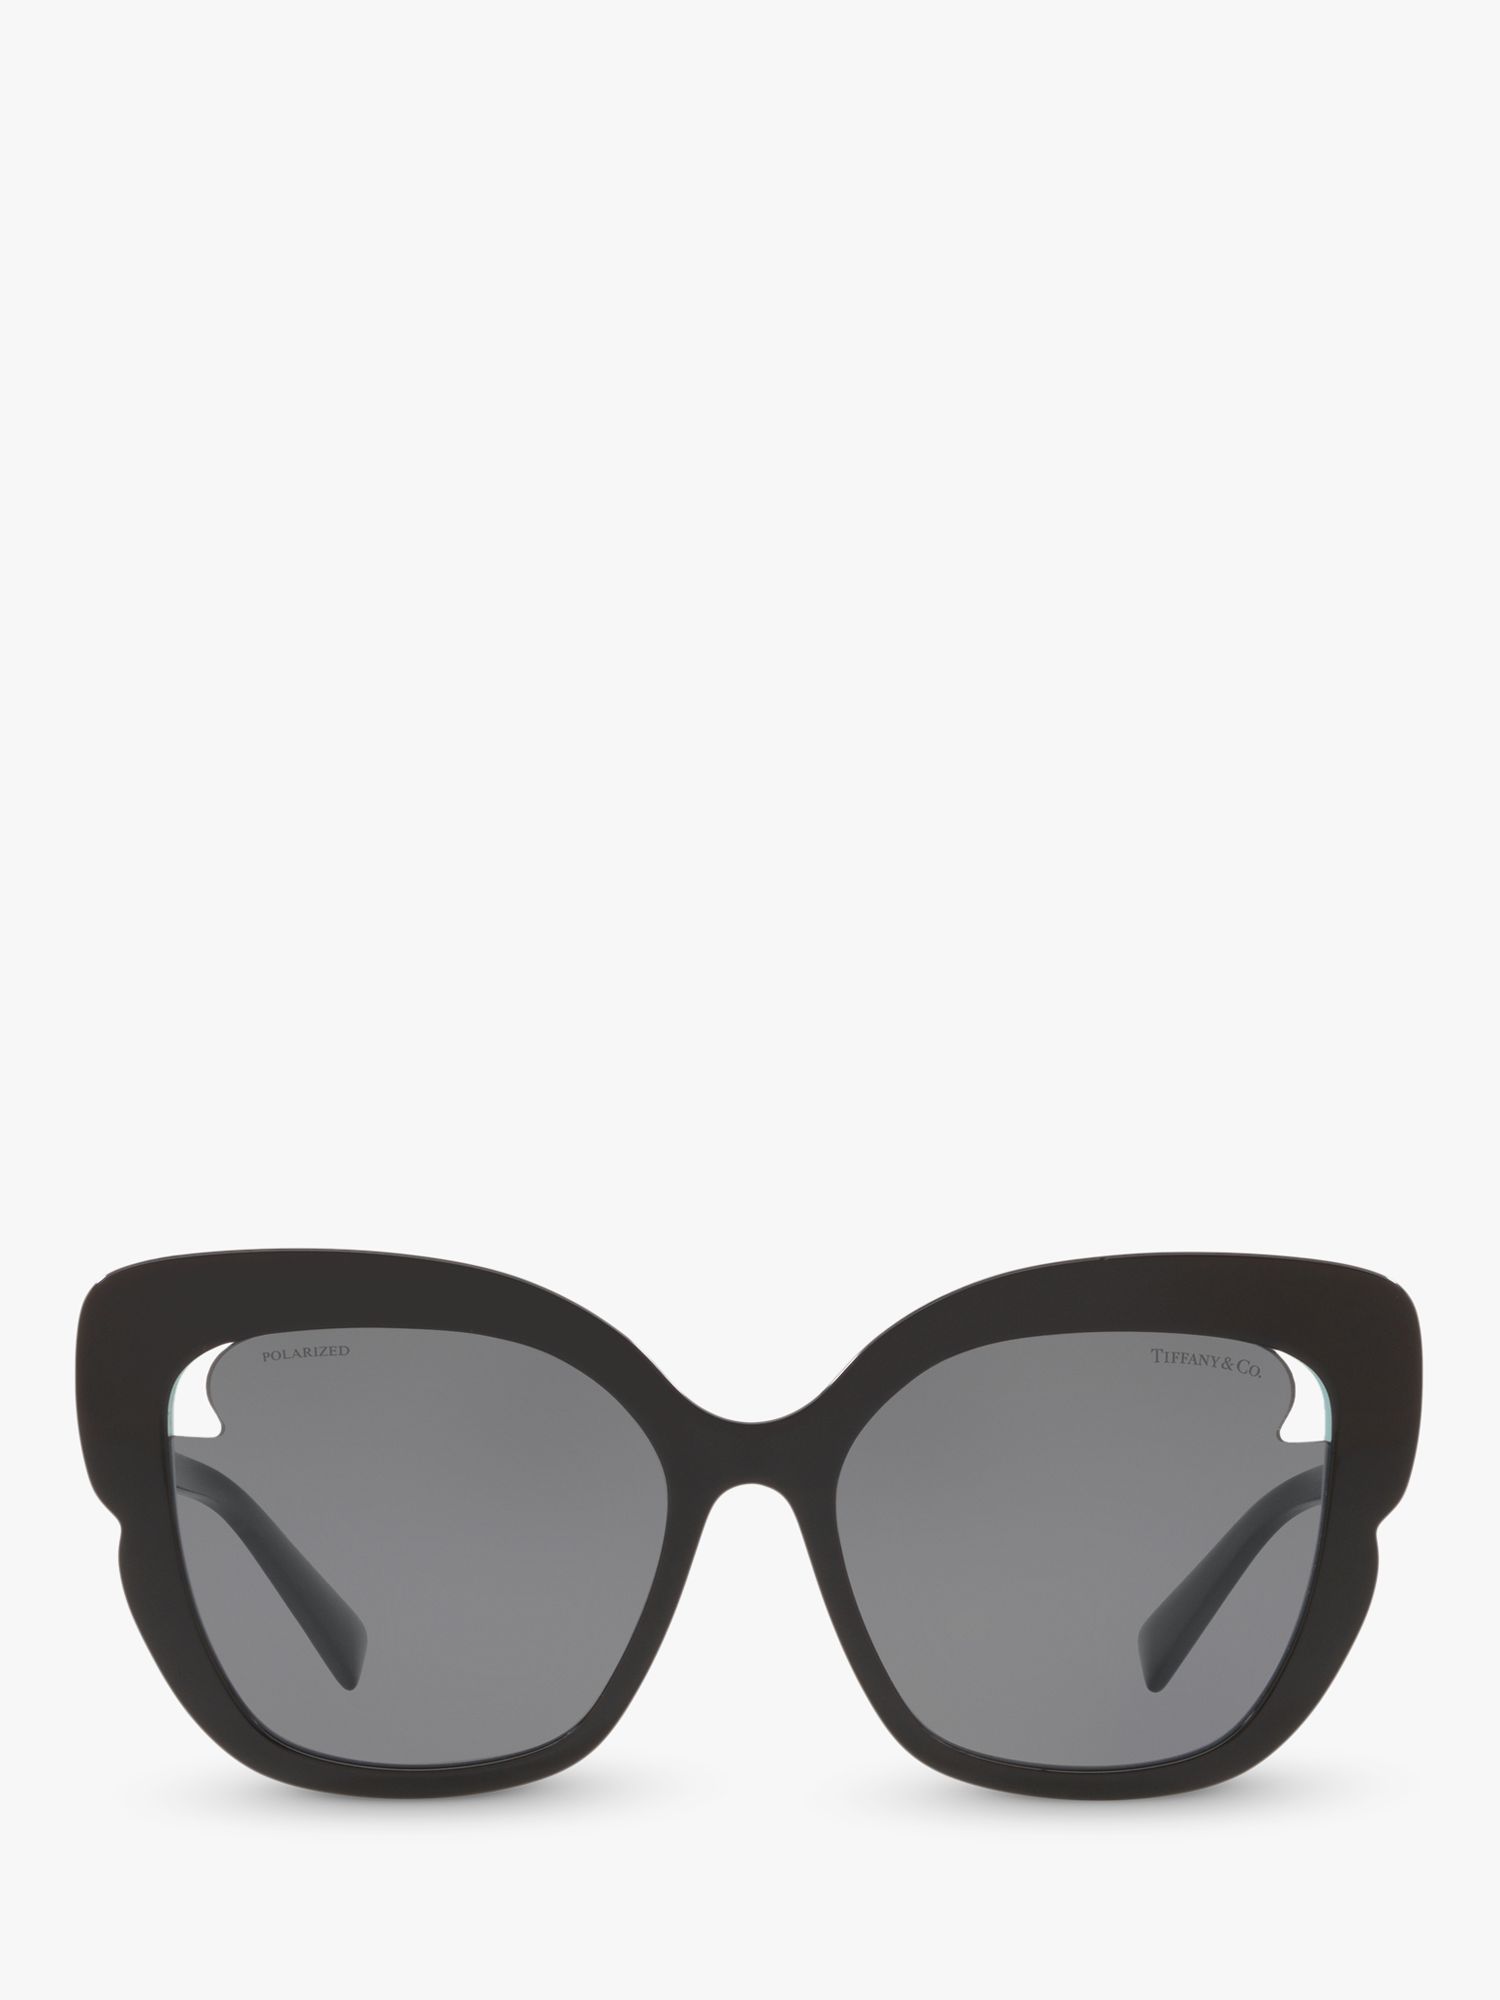 Tiffany & Co TF4161 Women's Polarised Square Sunglasses, Black